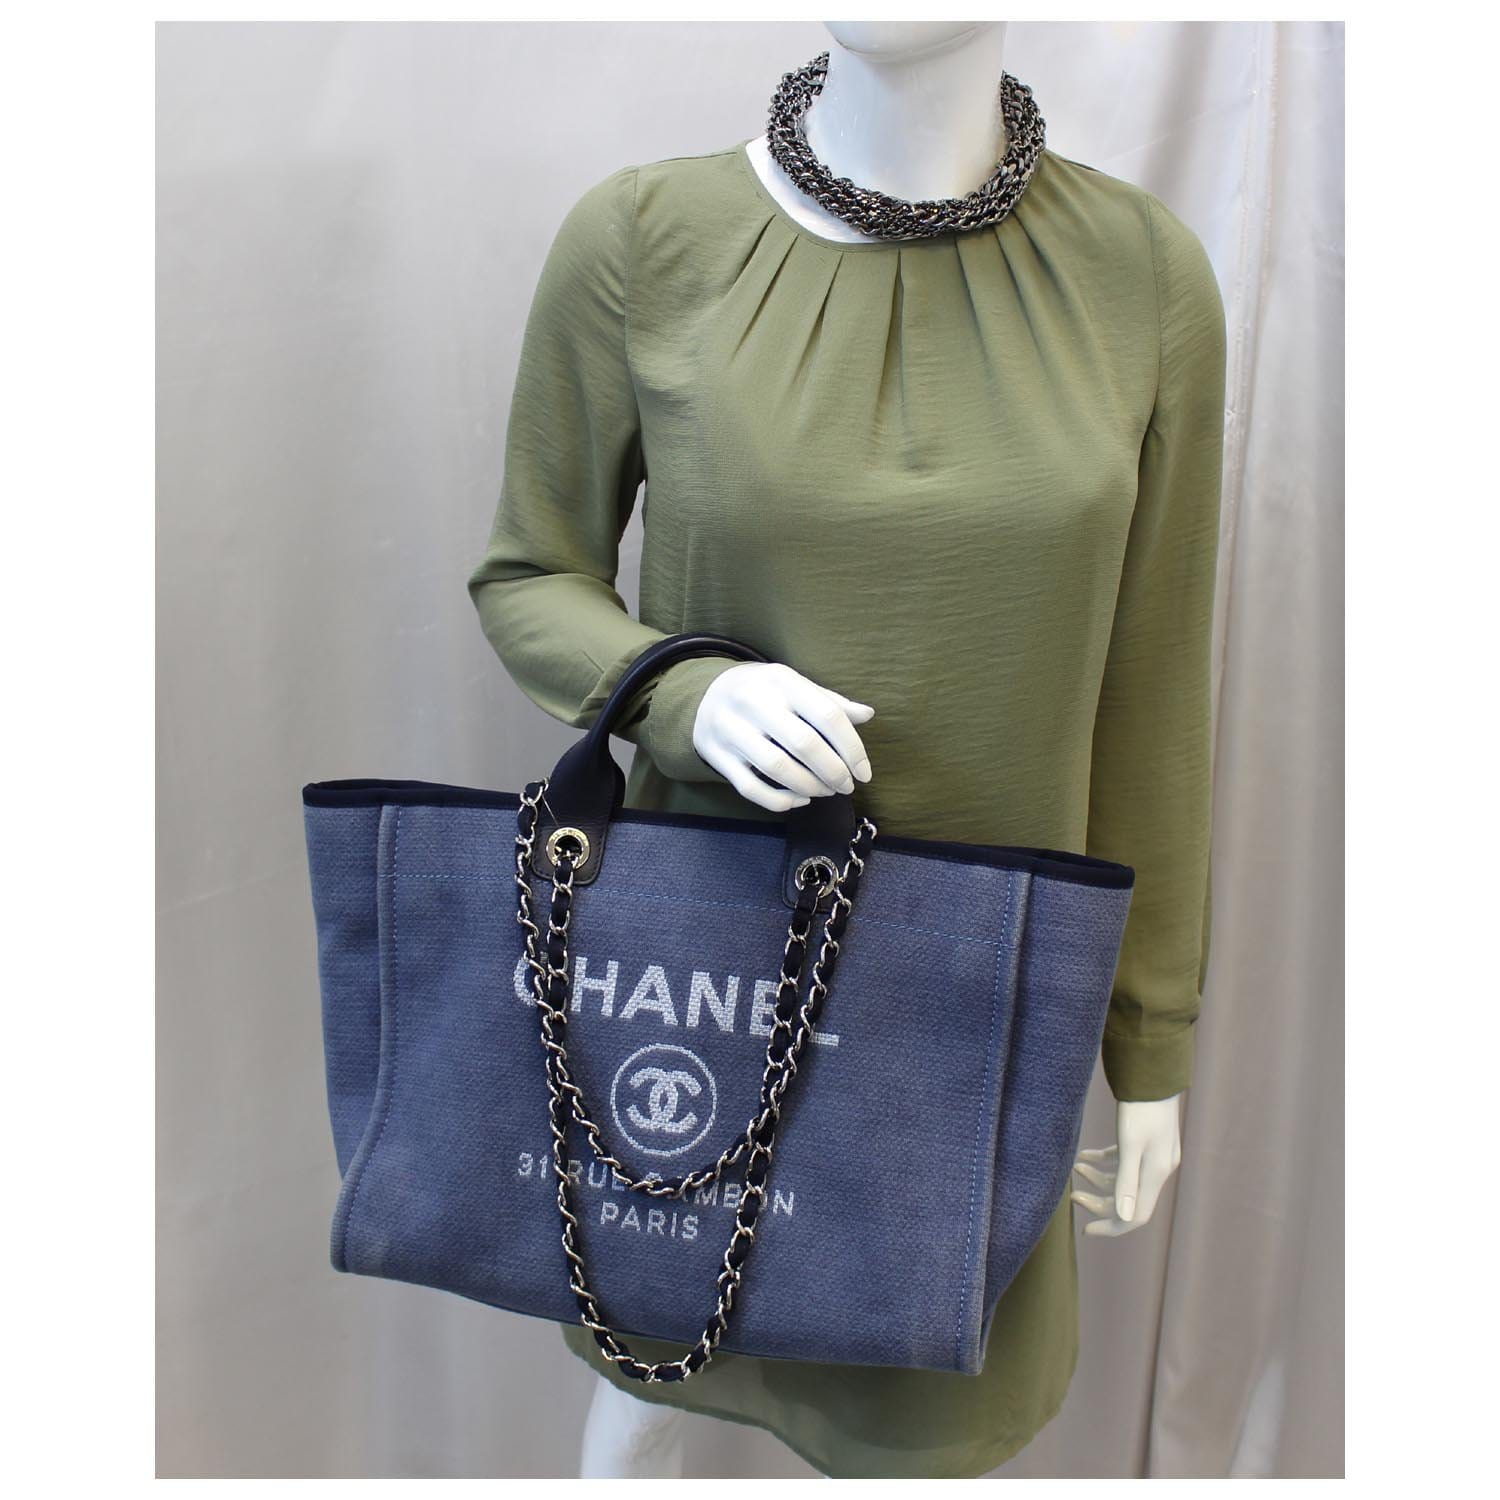 chanel large shopping bag blue